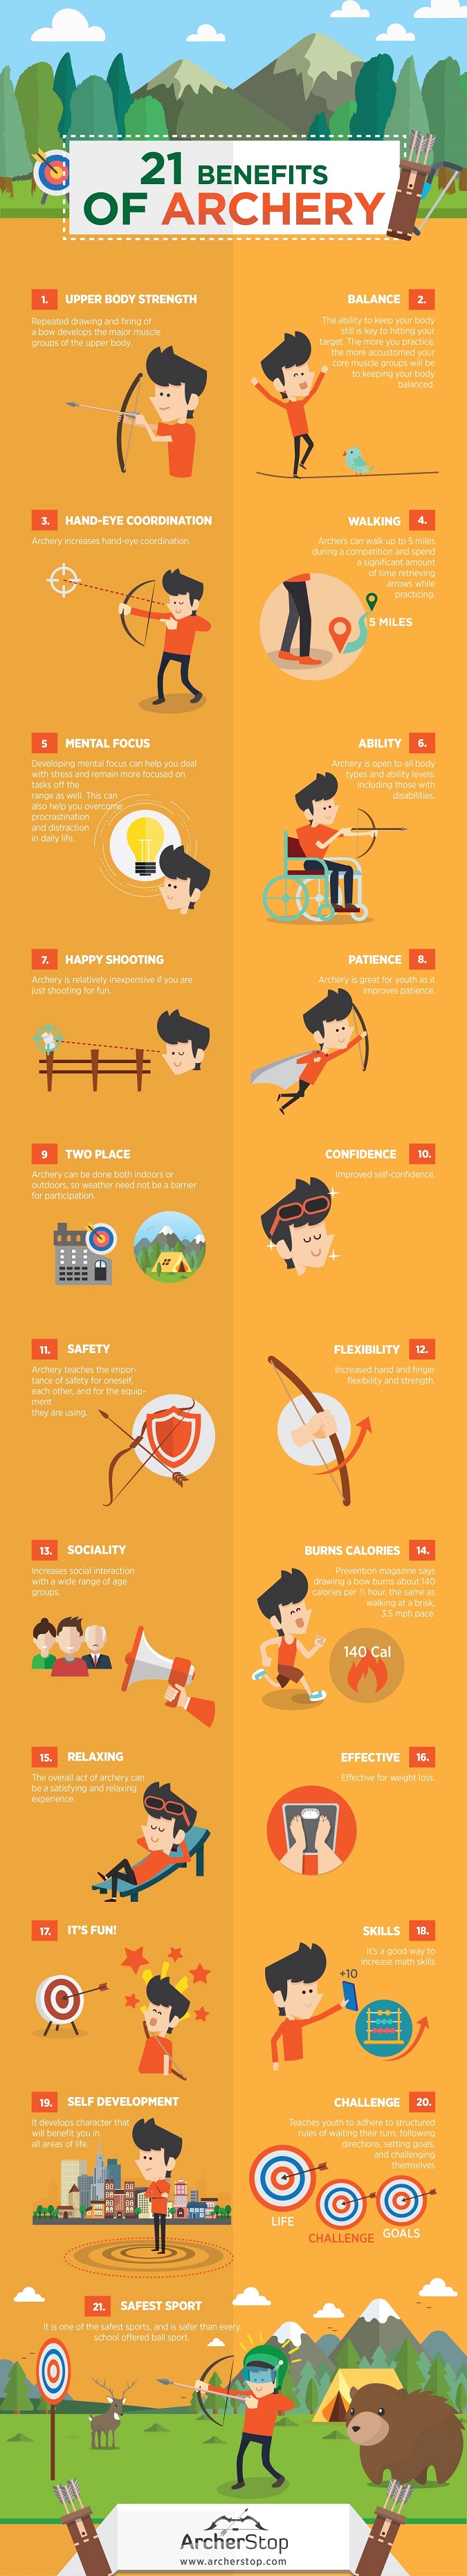 21 Benefits of Archery